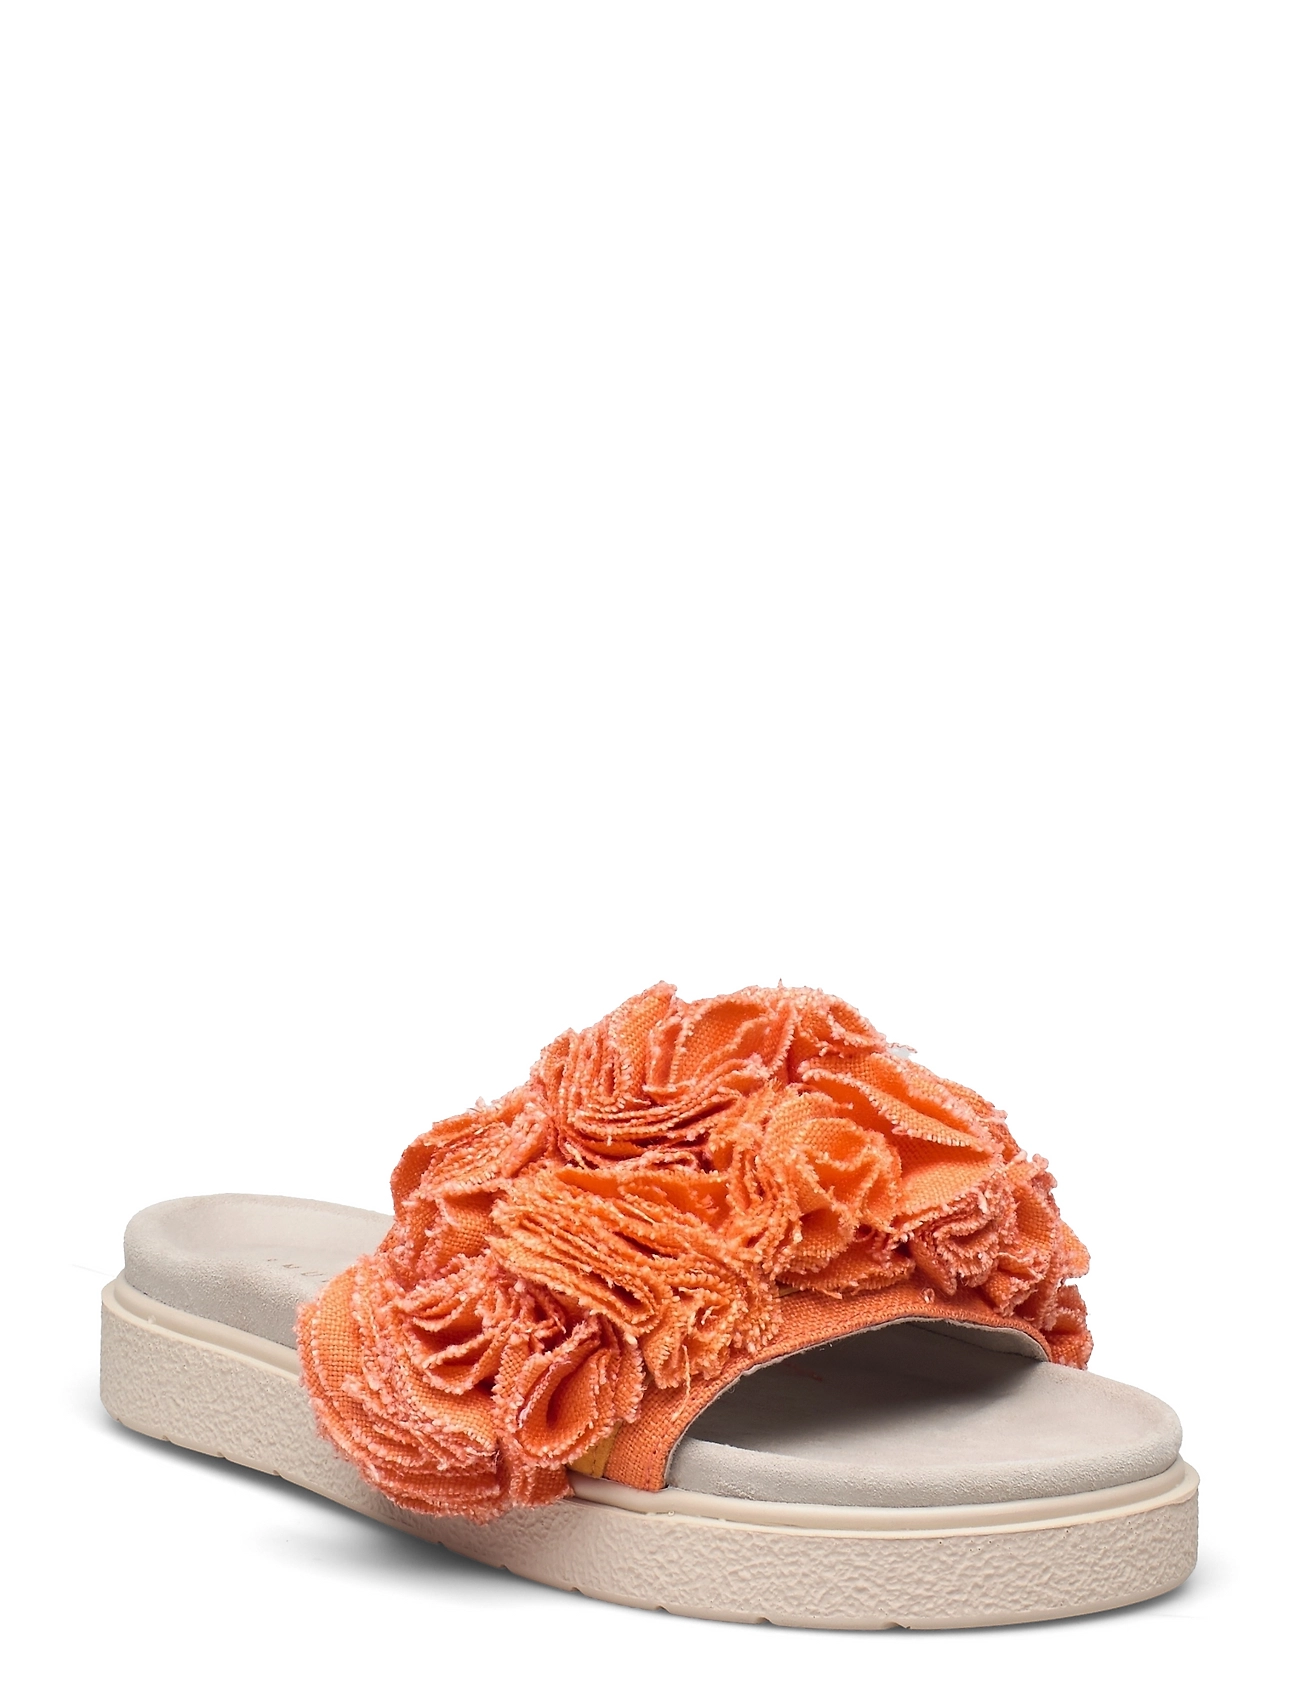 Lory Lu Shoes Summer Shoes Flat Sandals Orange Inuikii